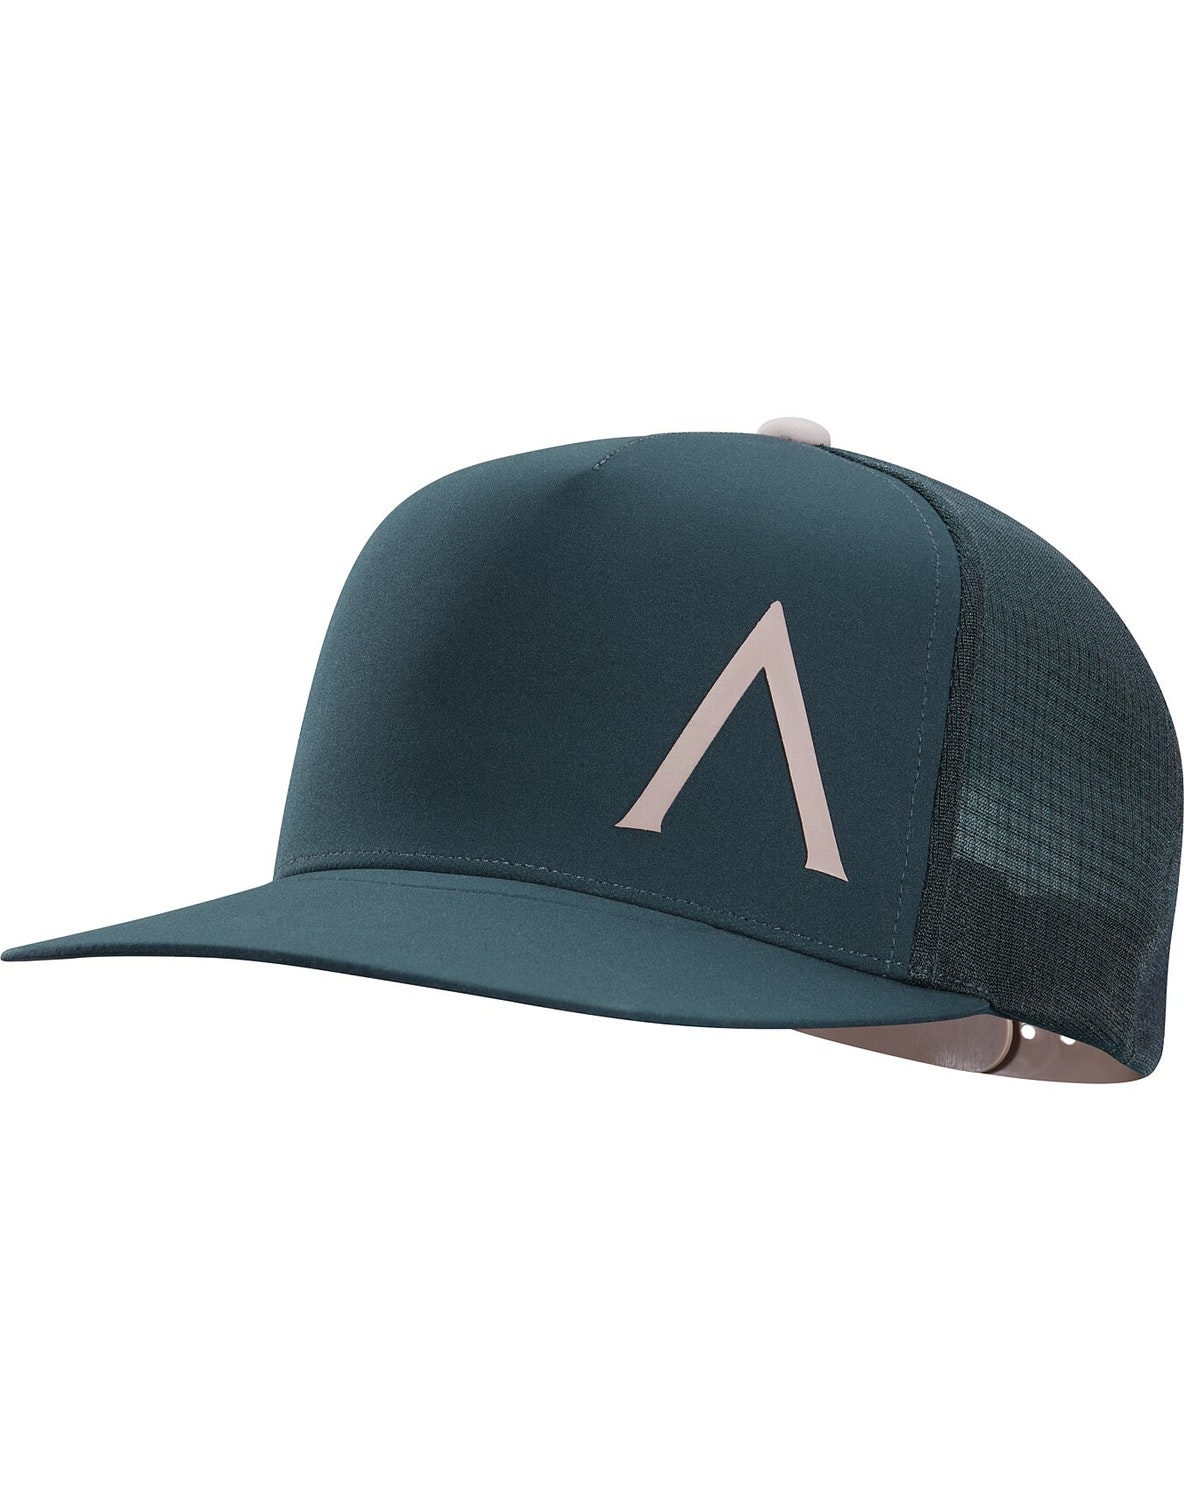 Hats Arc'teryx A-Pop Uomo Blu Marino - IT-7143